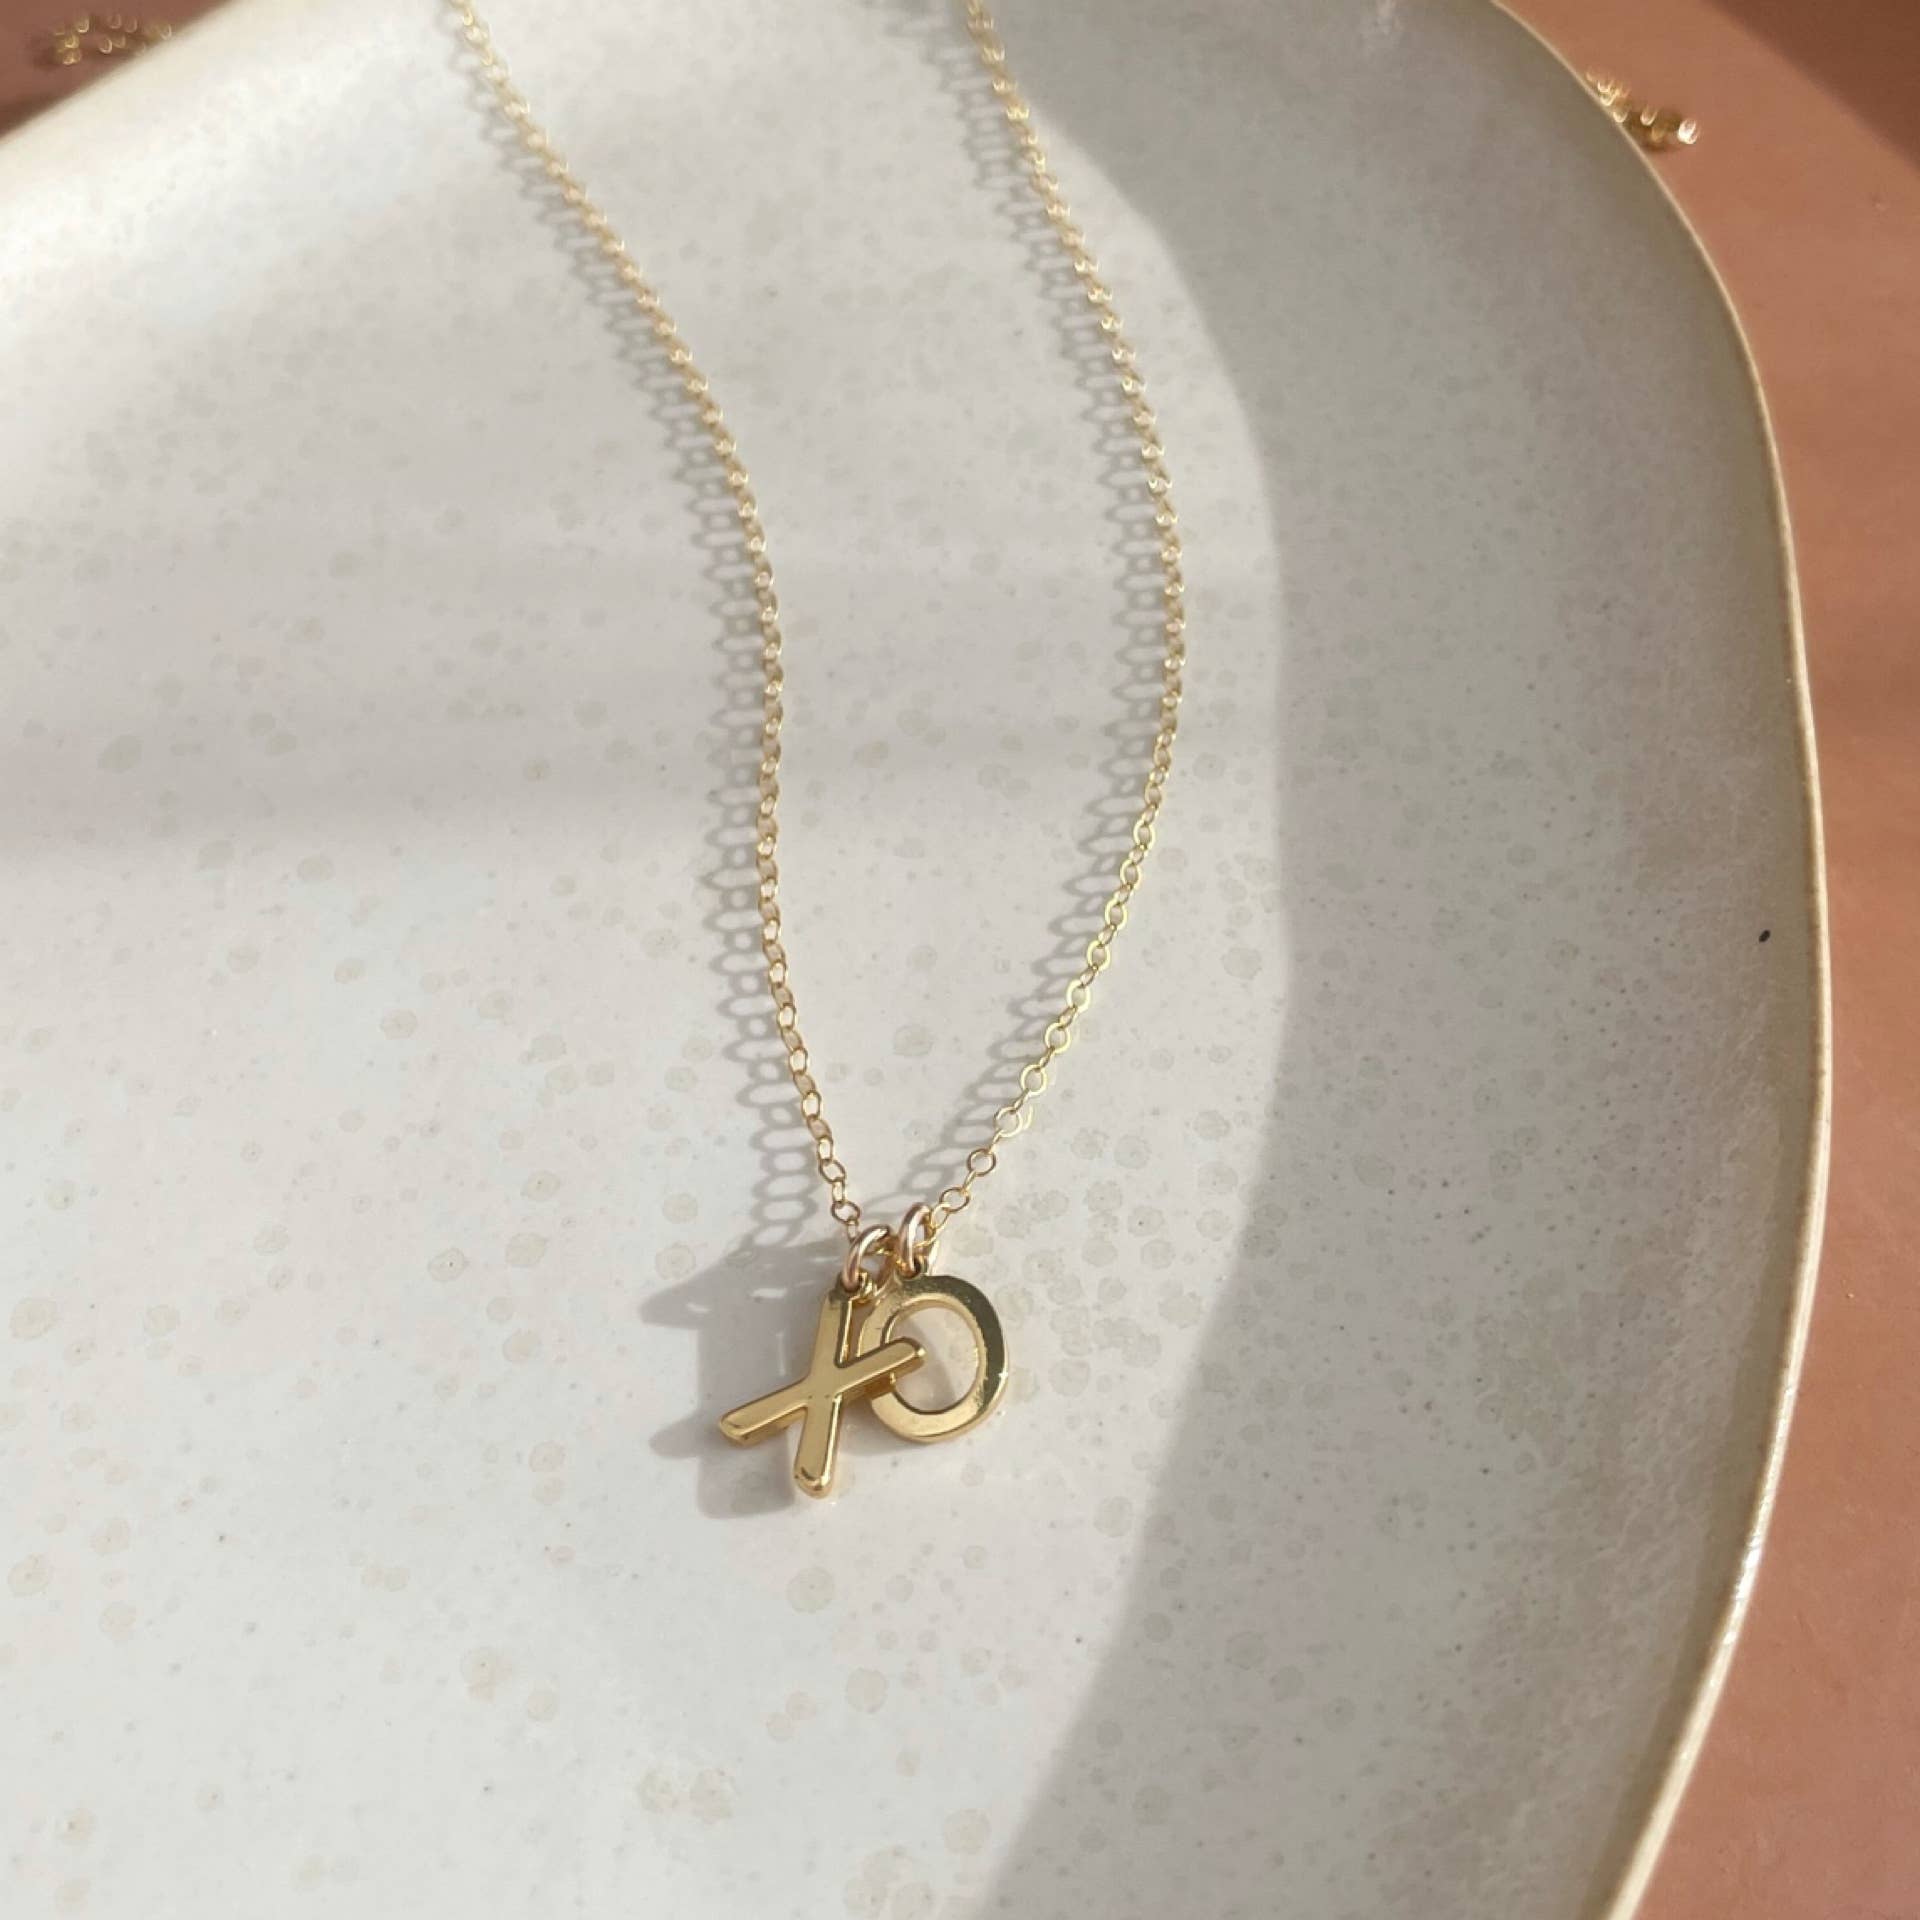 09ctw Diamond XO Necklace in 14k White Gold - 18